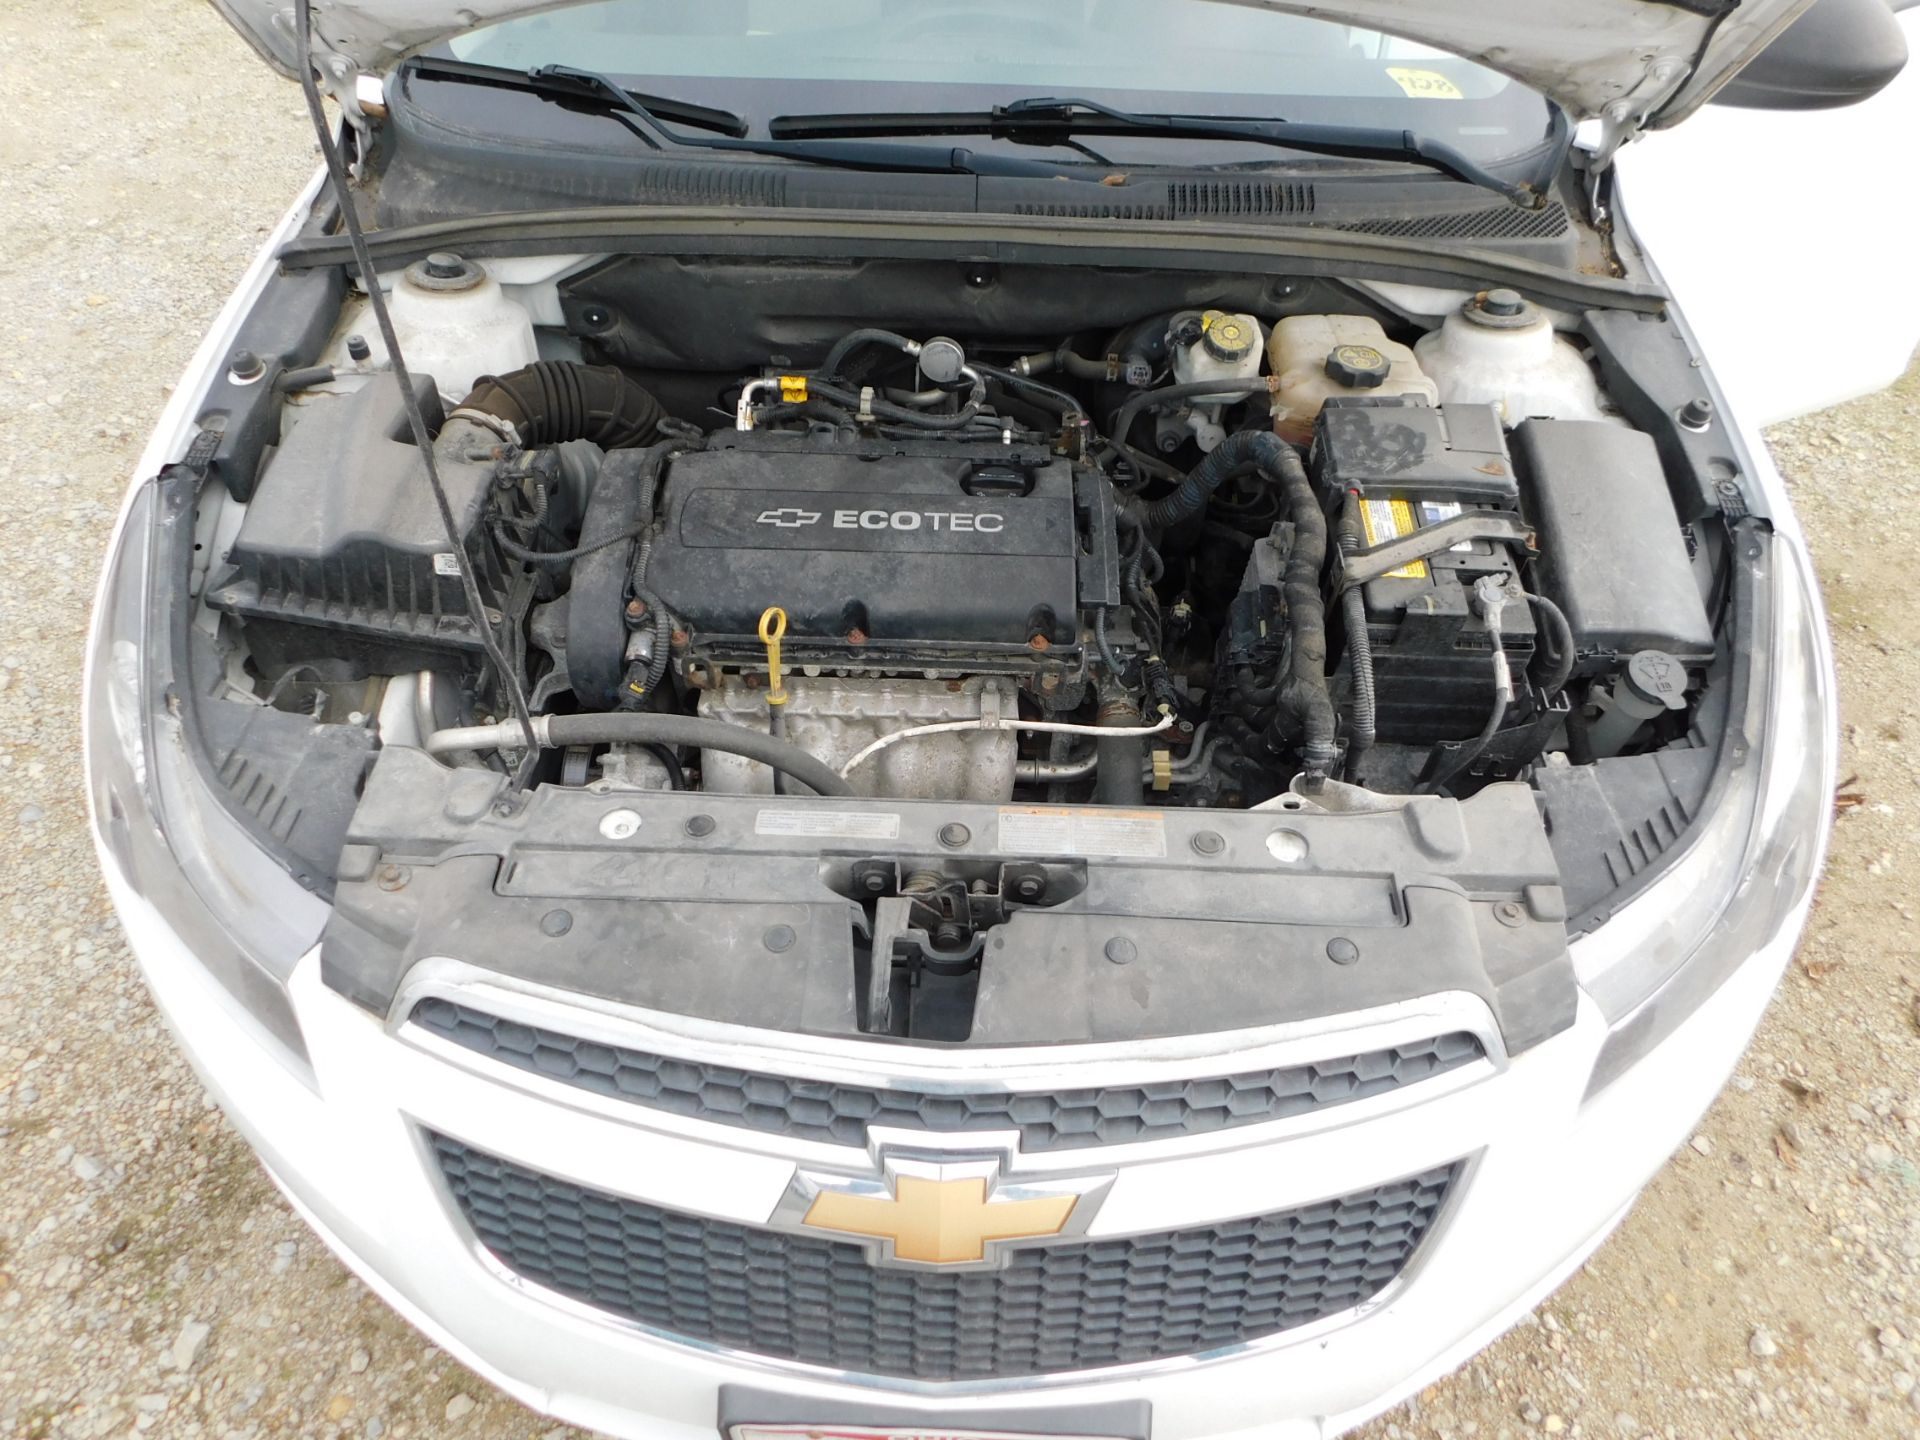 2014 Chevrolet Cruze 4-Door Sedan, VIN 1G1PA5SH8E7407566, AM/FM, AC, Cruise Control, PW, PL, 98, - Image 37 of 45